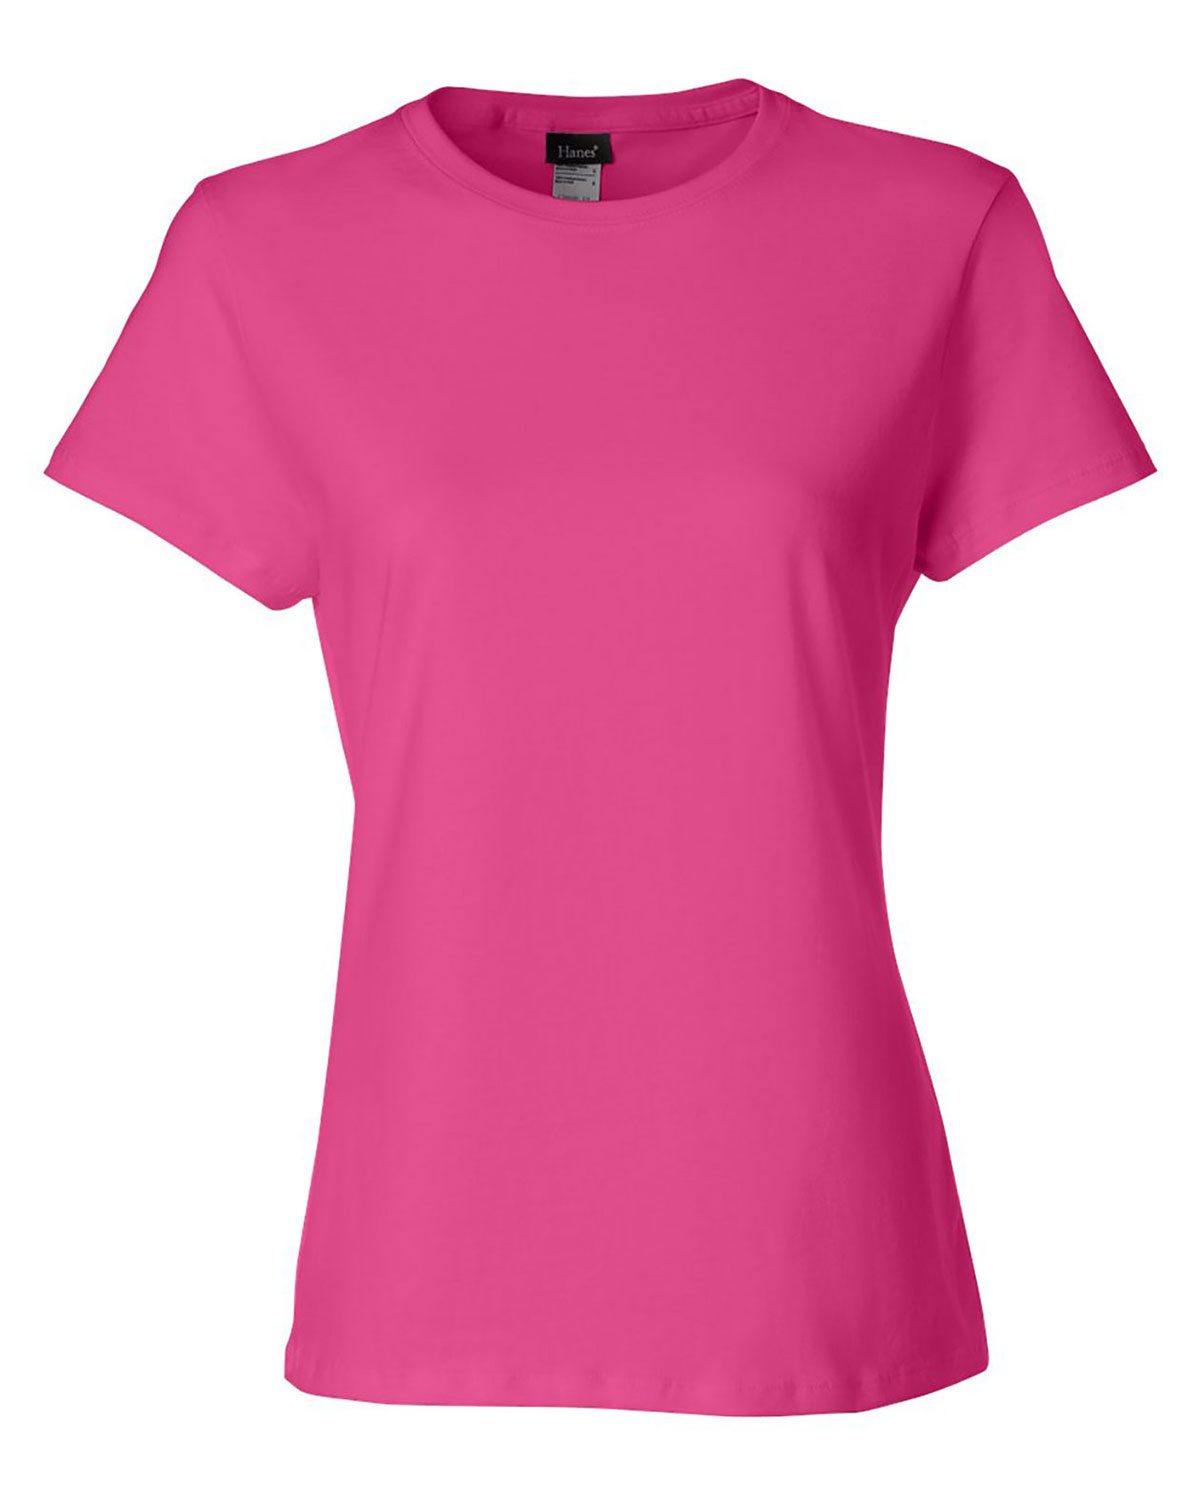 Hanes SL04 Women 4.5 Oz. 100% Ringspun Cotton Nanot T-Shirt at Apparelstation